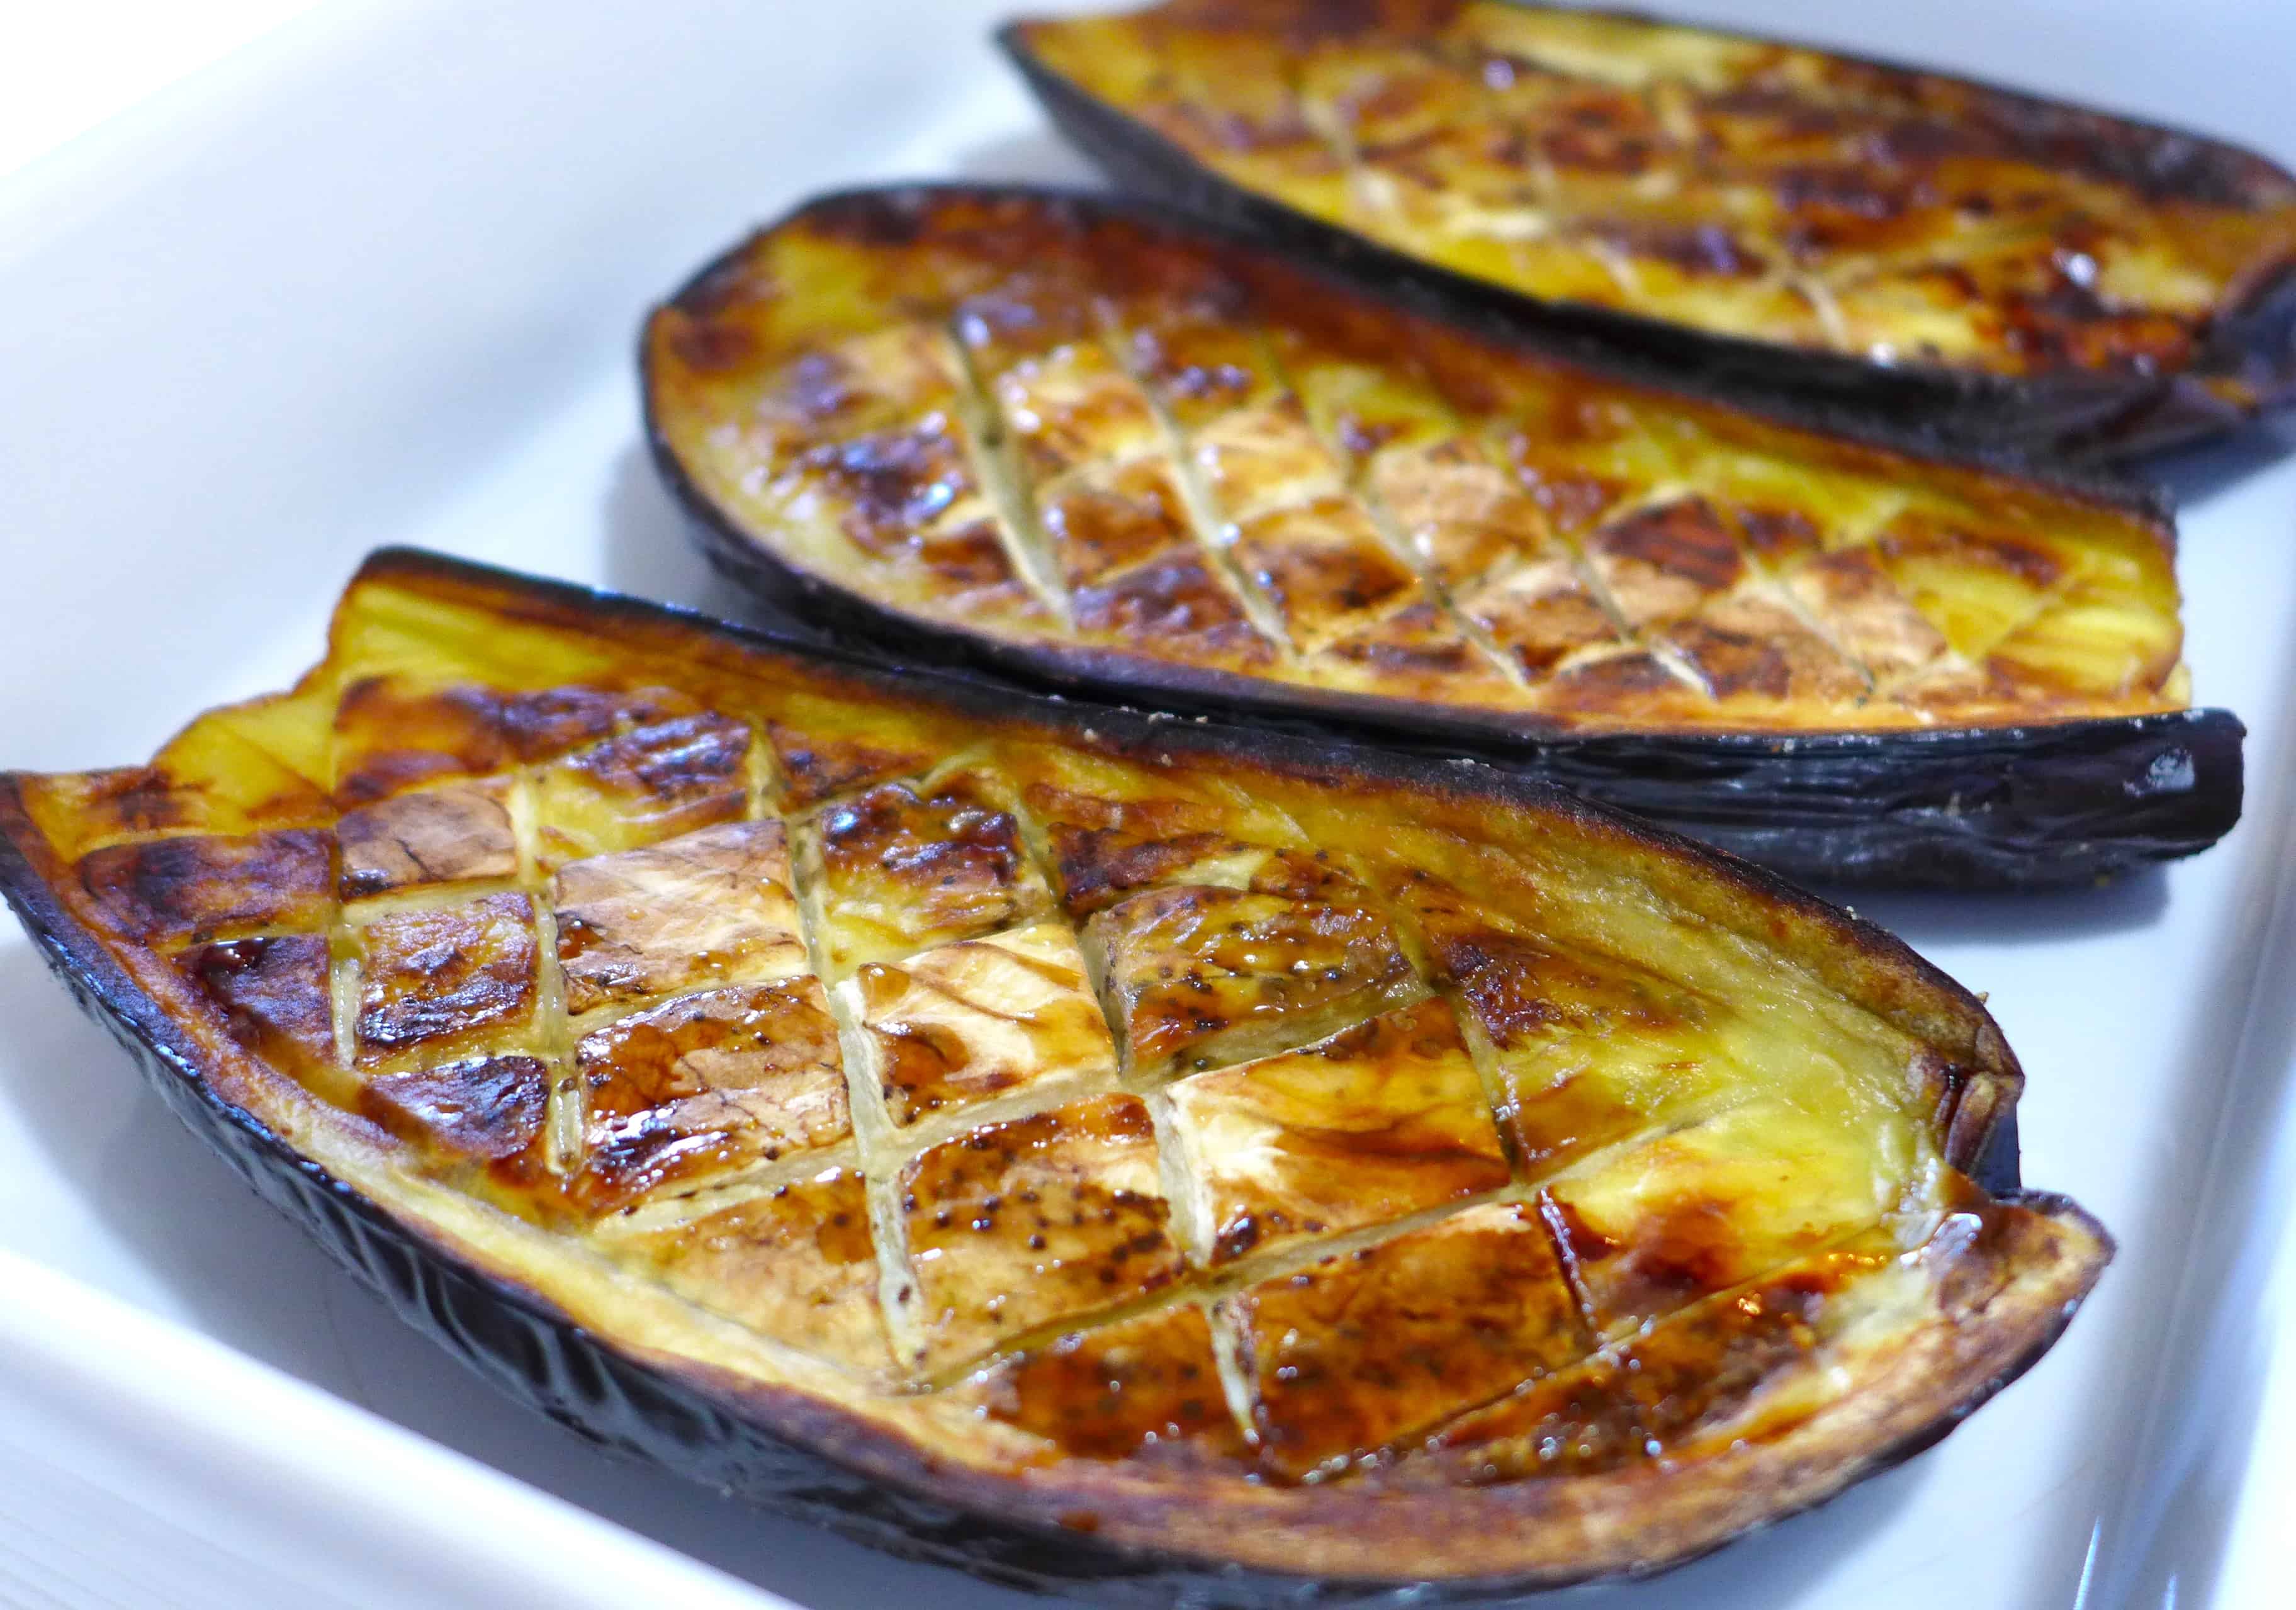 baked stuffed eggplant recipes easy
